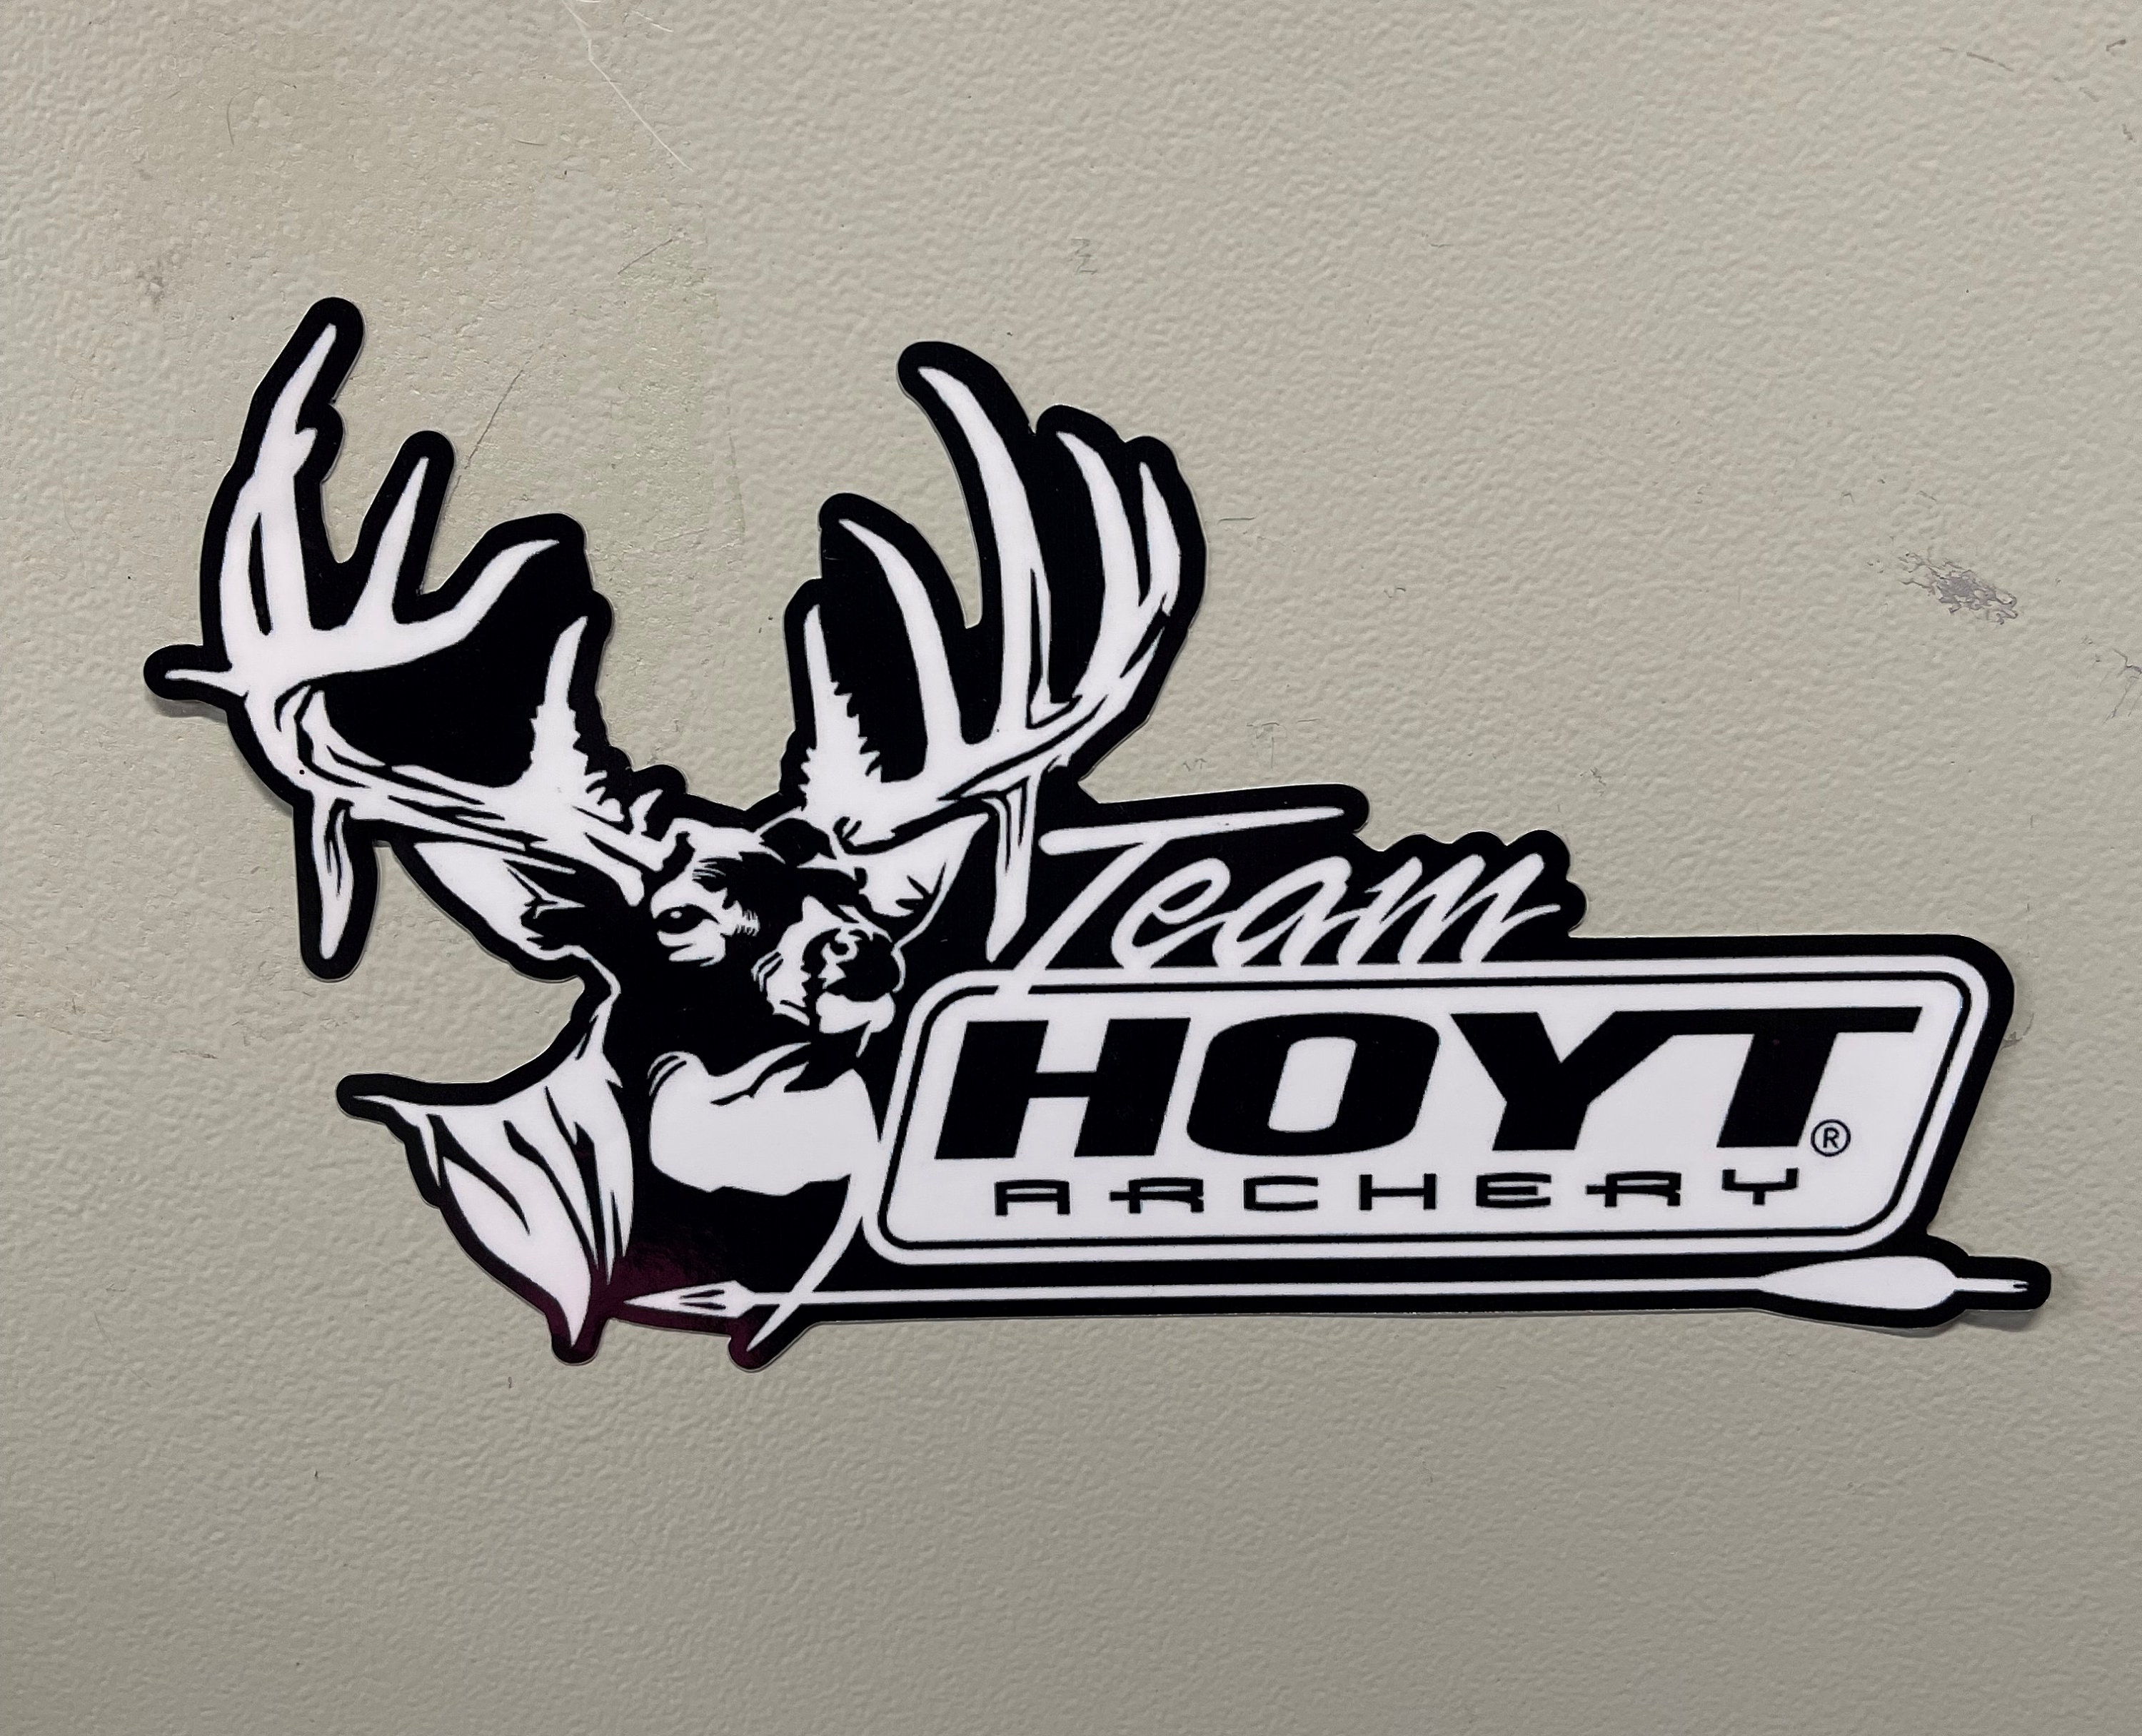 Team hoyt archery for sale  